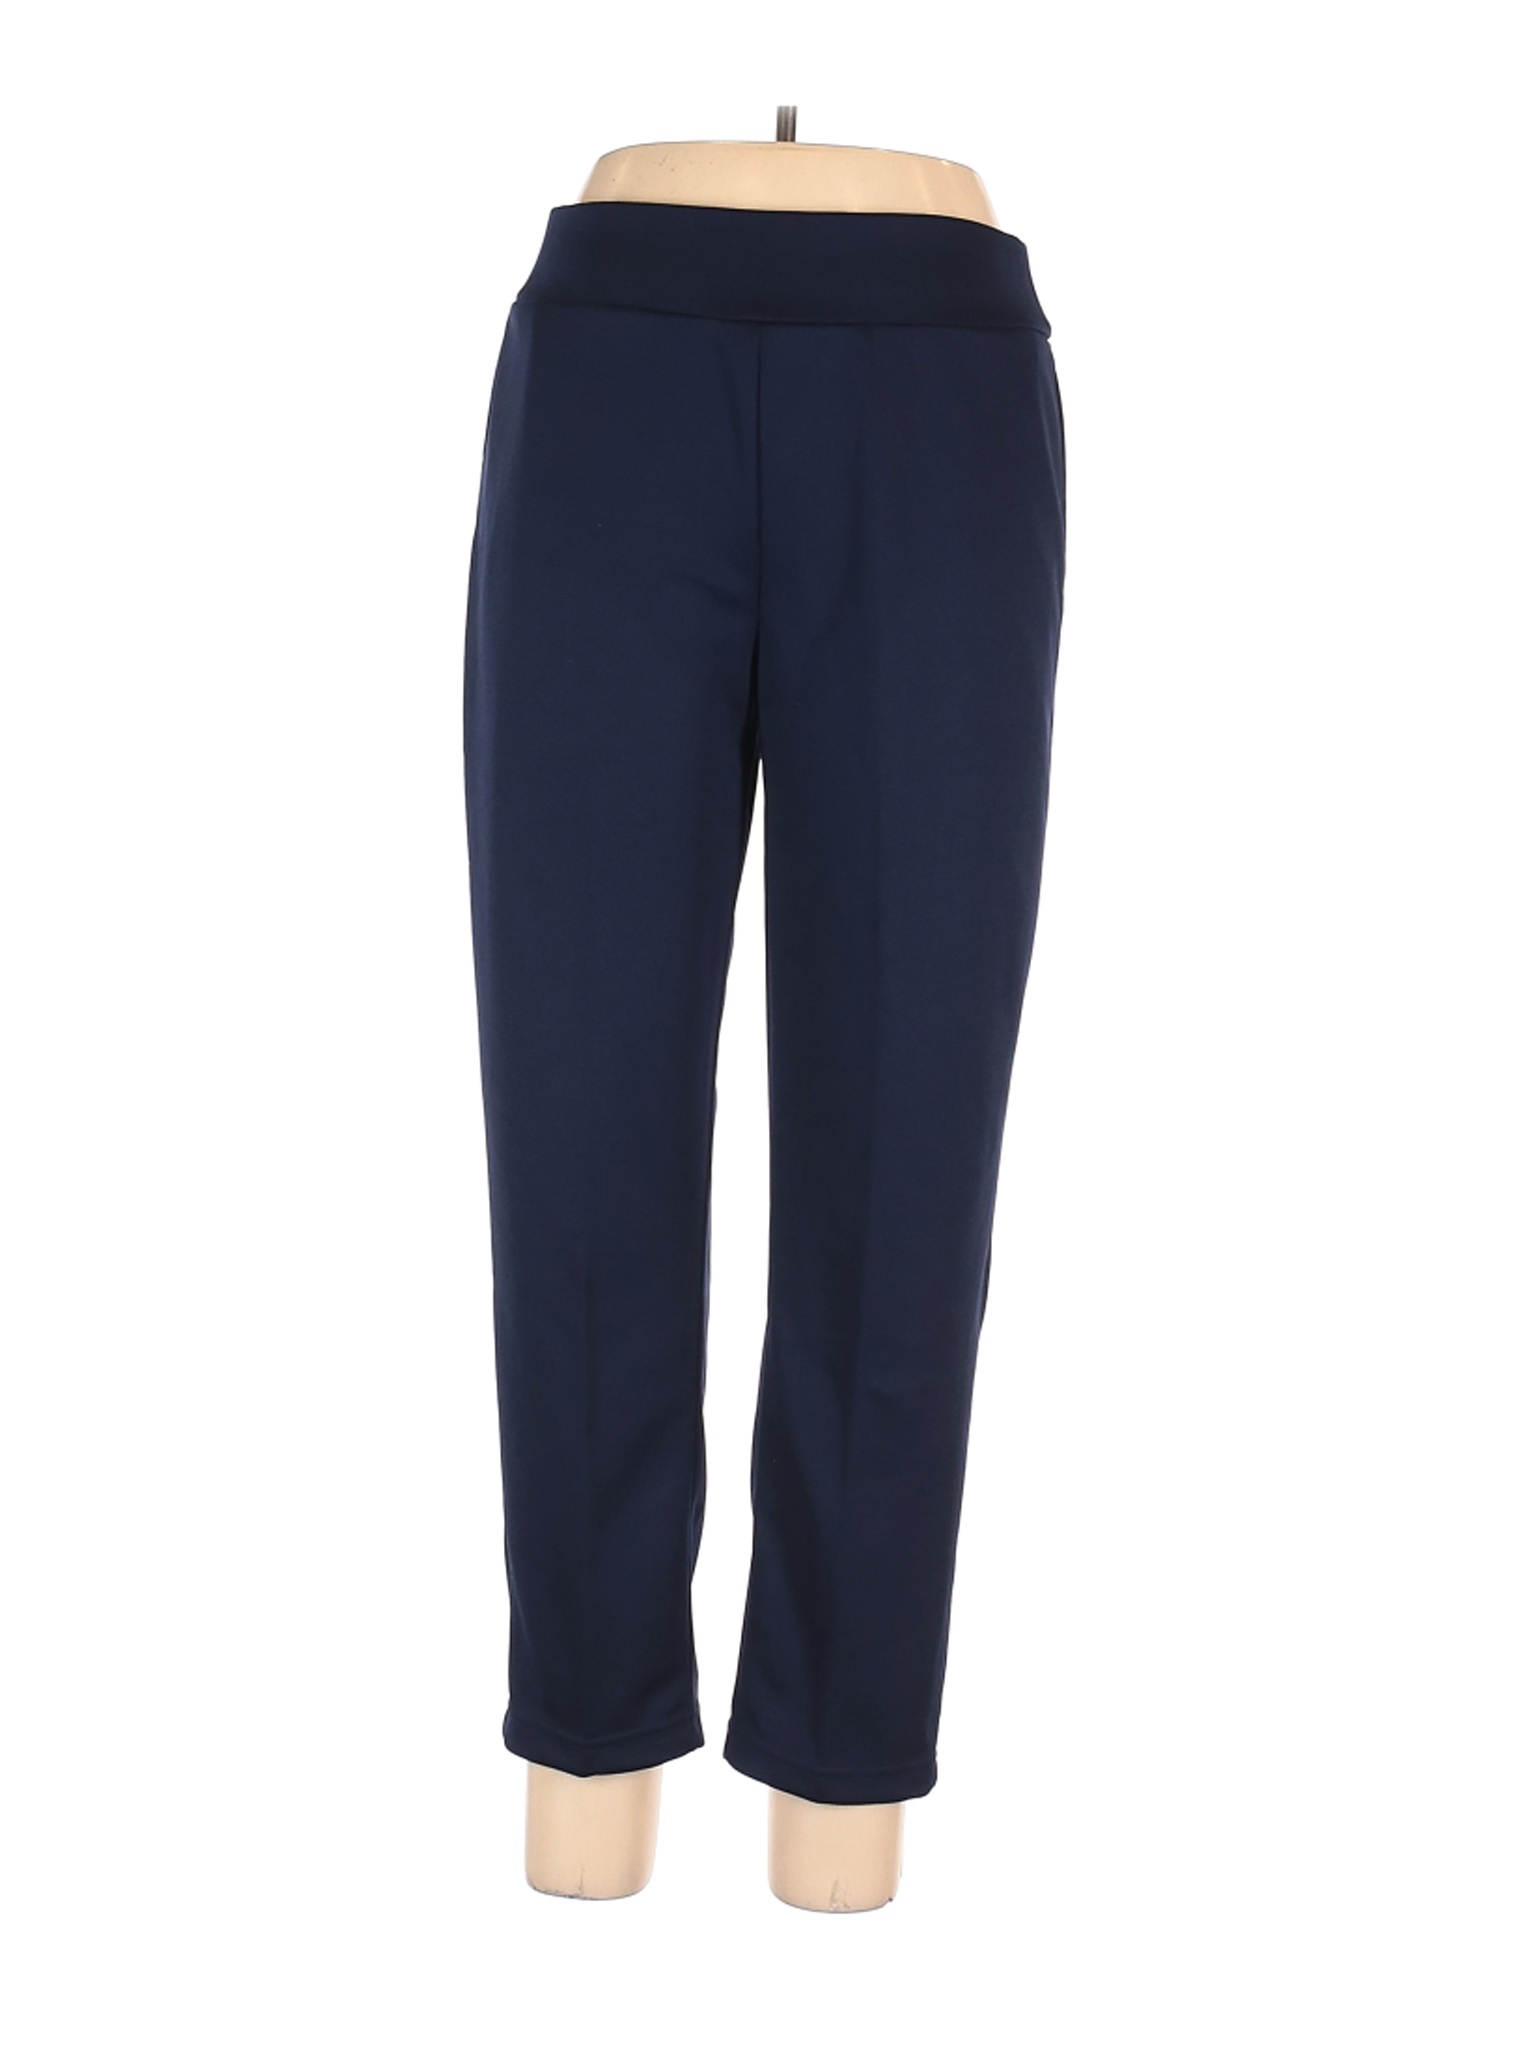 Blair Women Blue Casual Pants 14 Petites | eBay